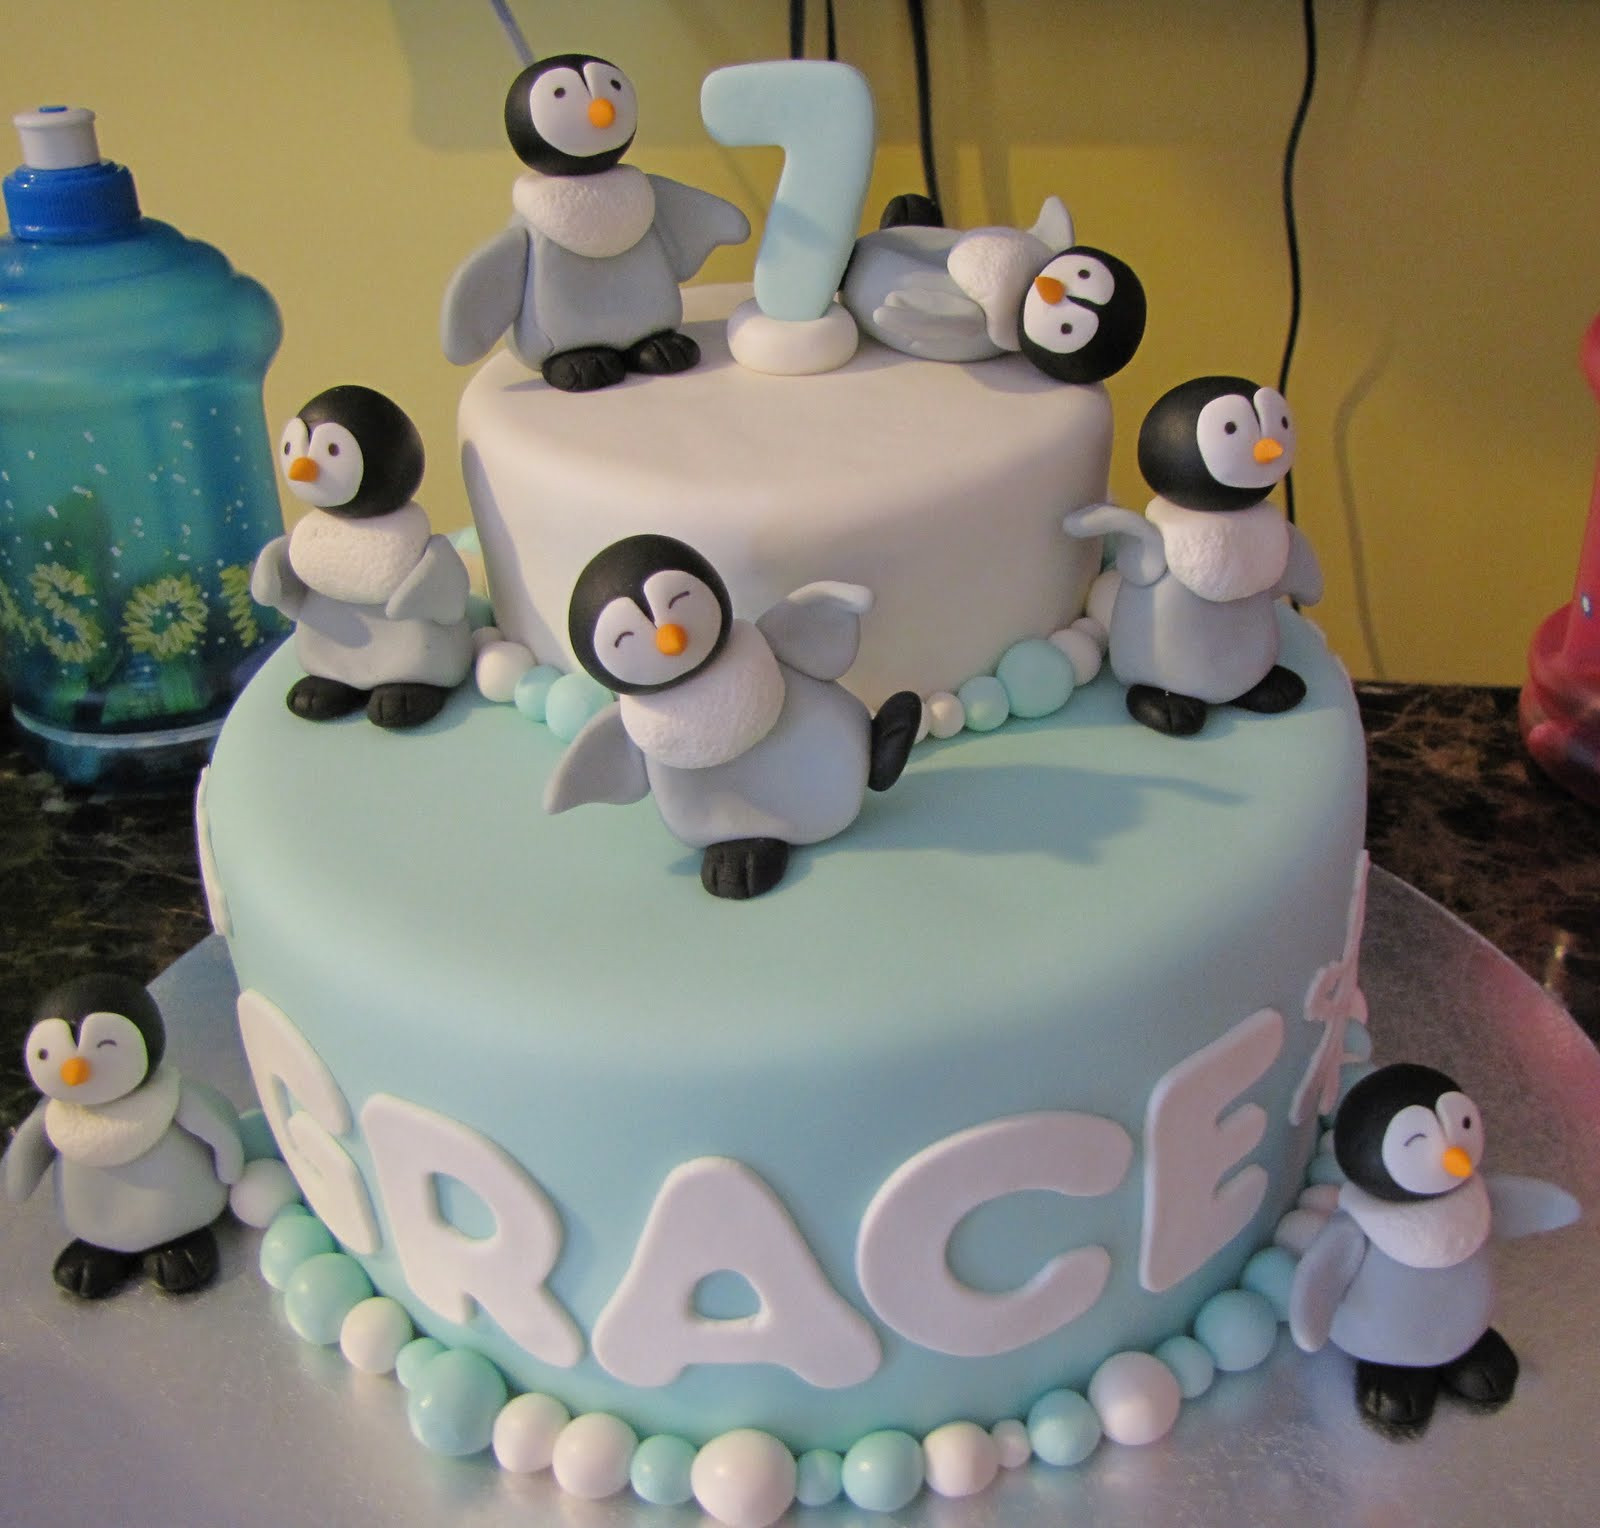 Penguin Birthday Cake
 MacKenzie s Crafty Mom